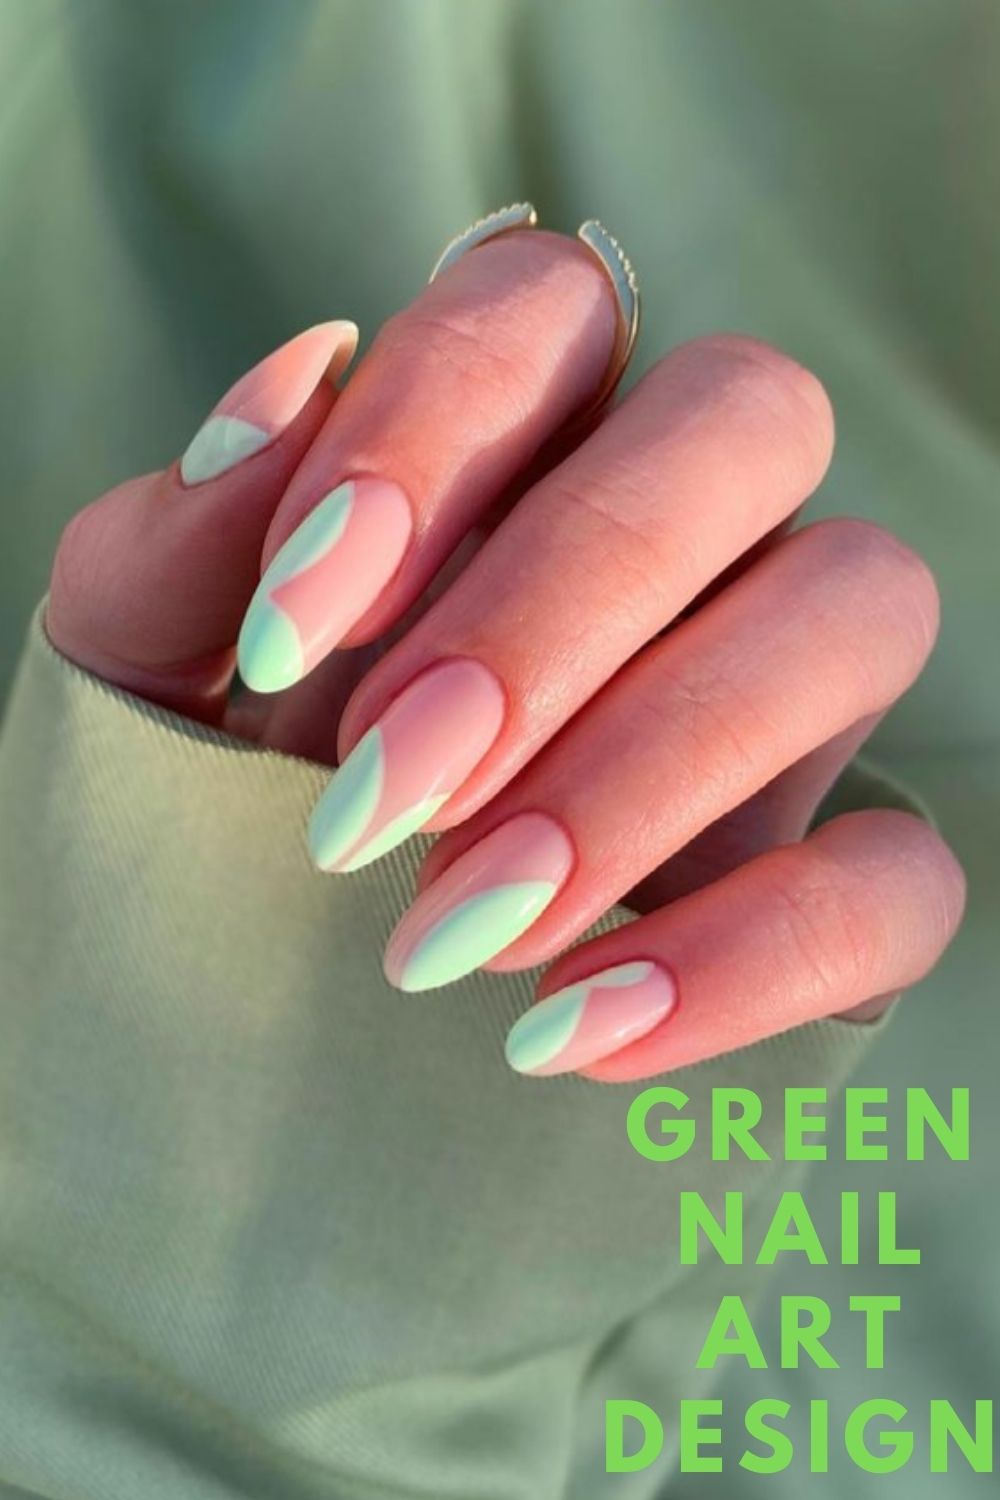 Simple neon green nails art designs